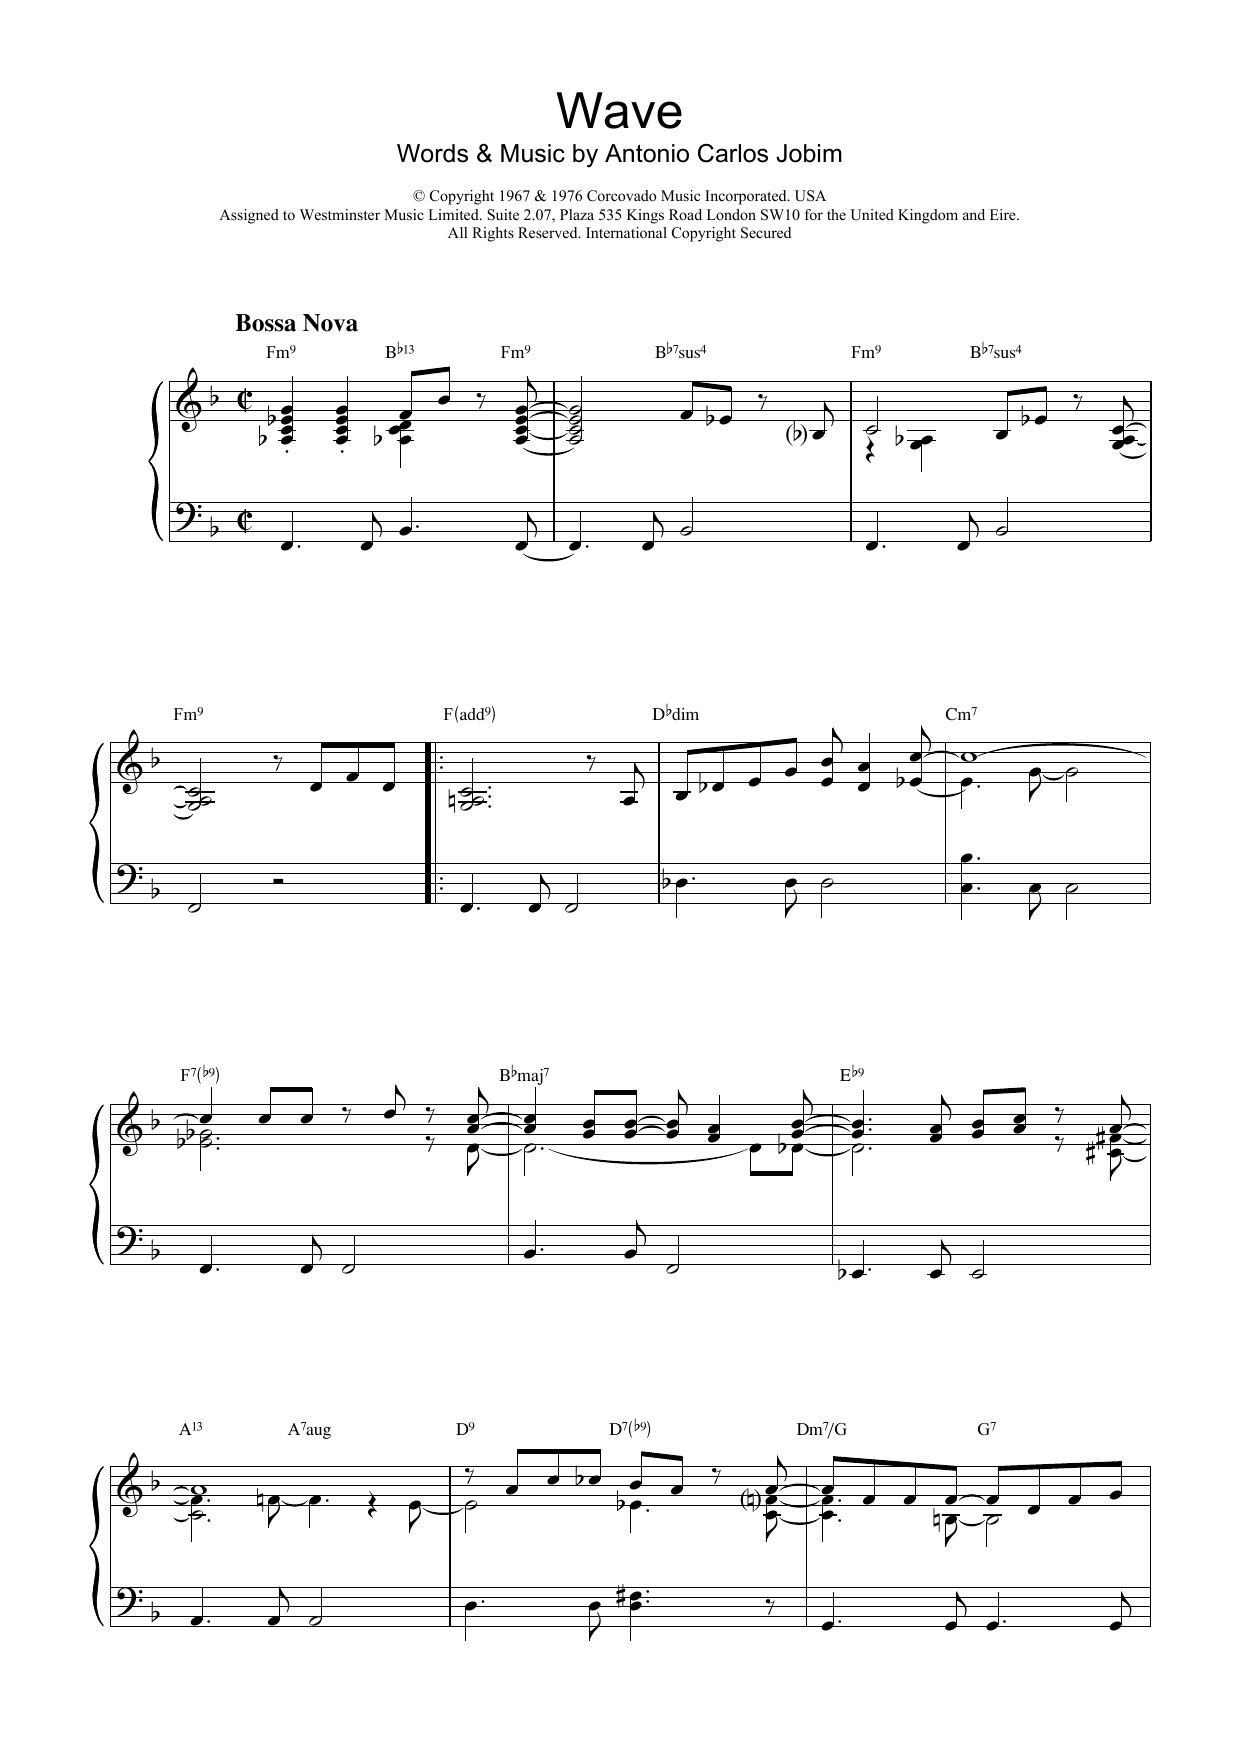 Antonio Carlos Jobim Wave Sheet Music Notes & Chords for Flute - Download or Print PDF